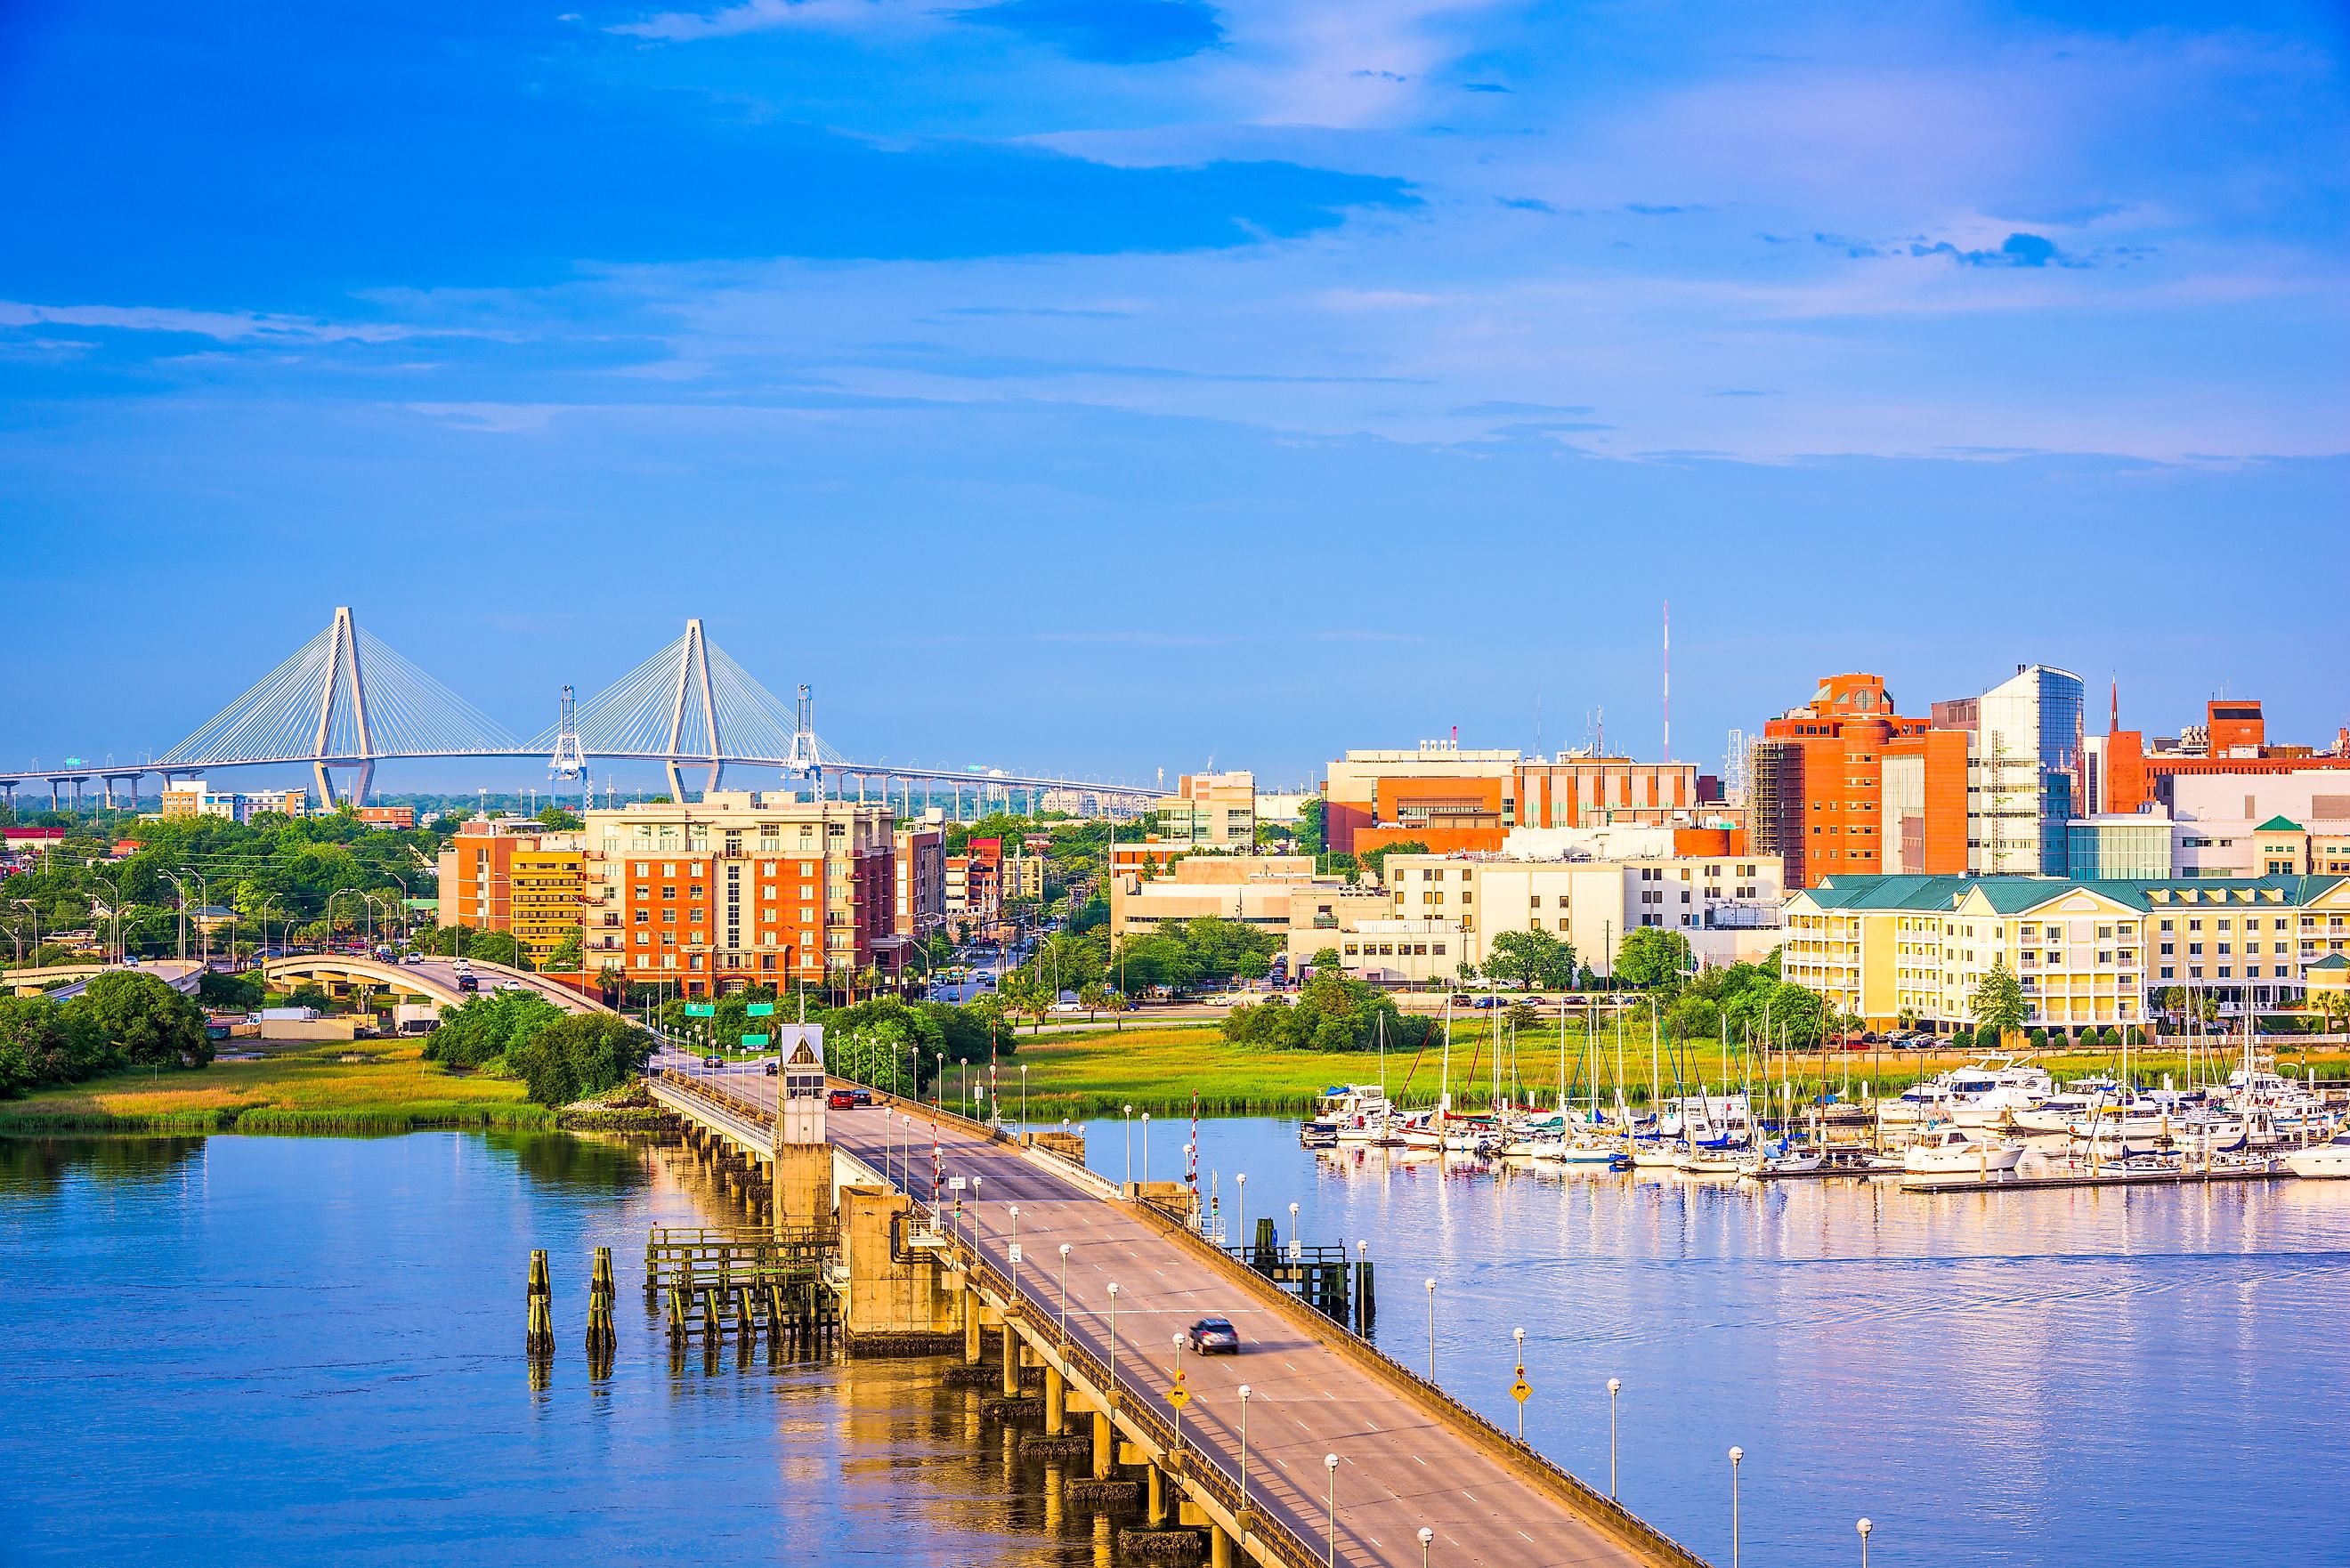 The cityscape of Charleston, South Carolina.